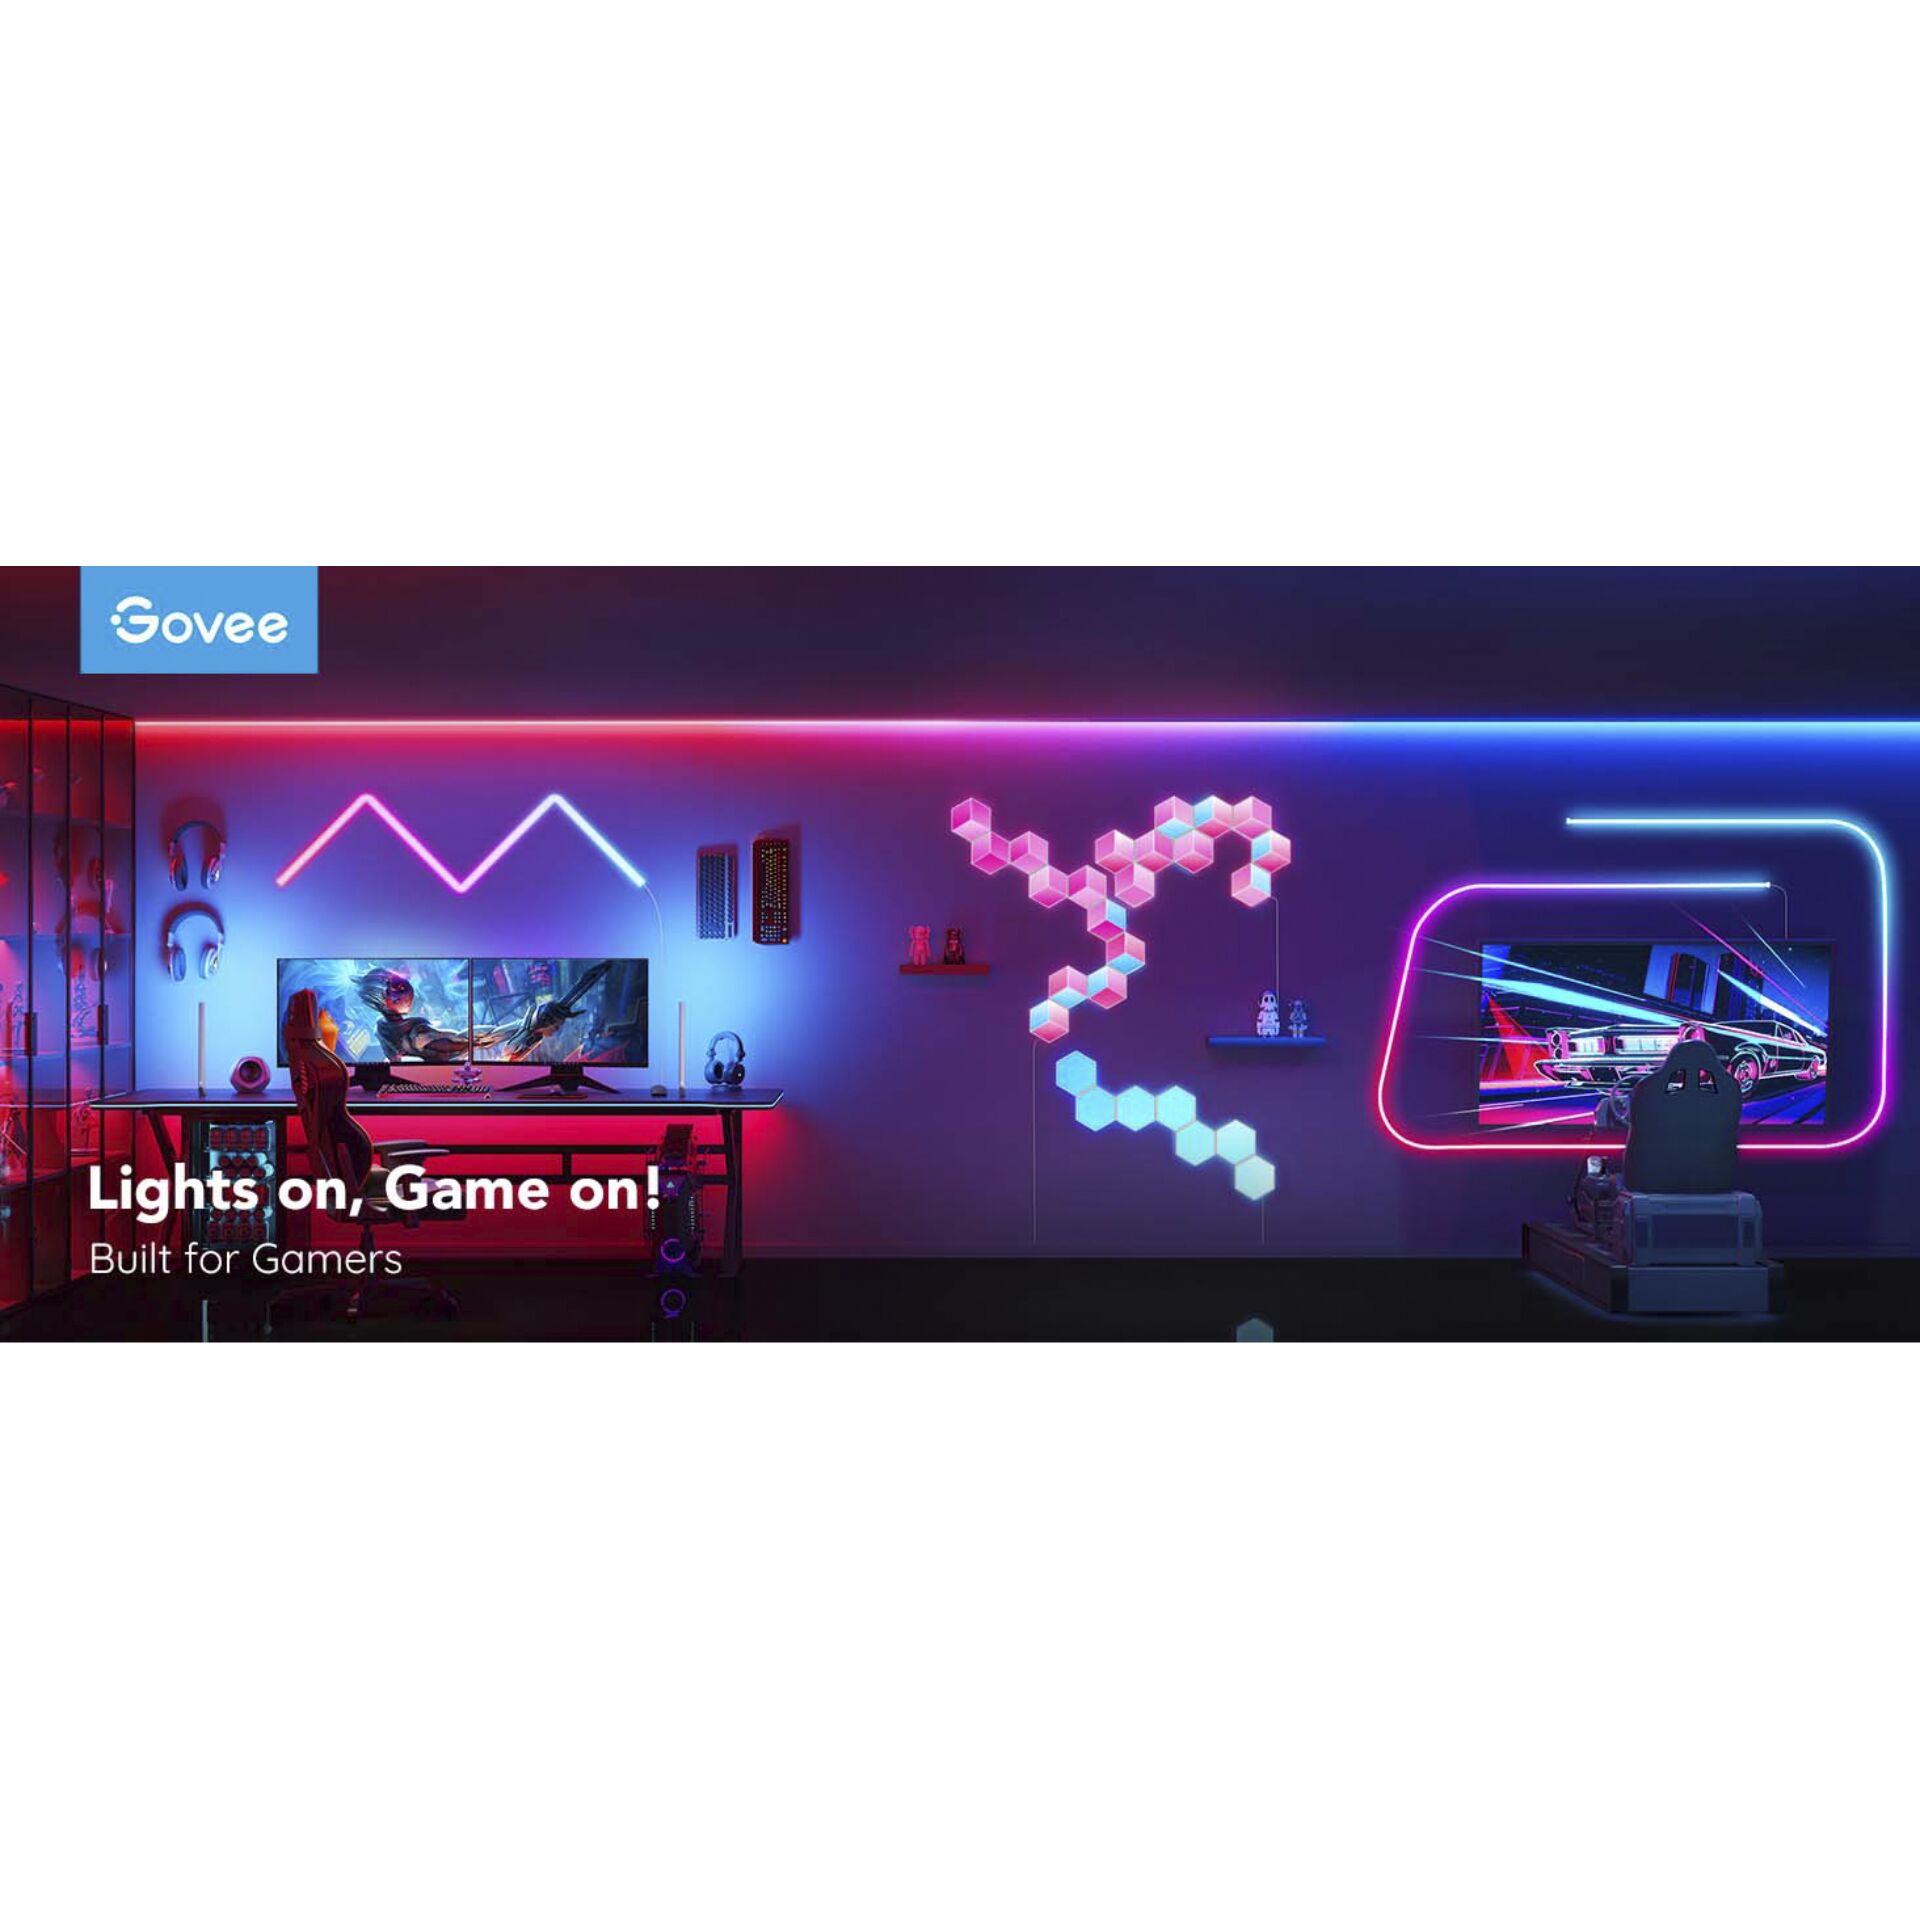 Govee Gaming Smart Light Bars